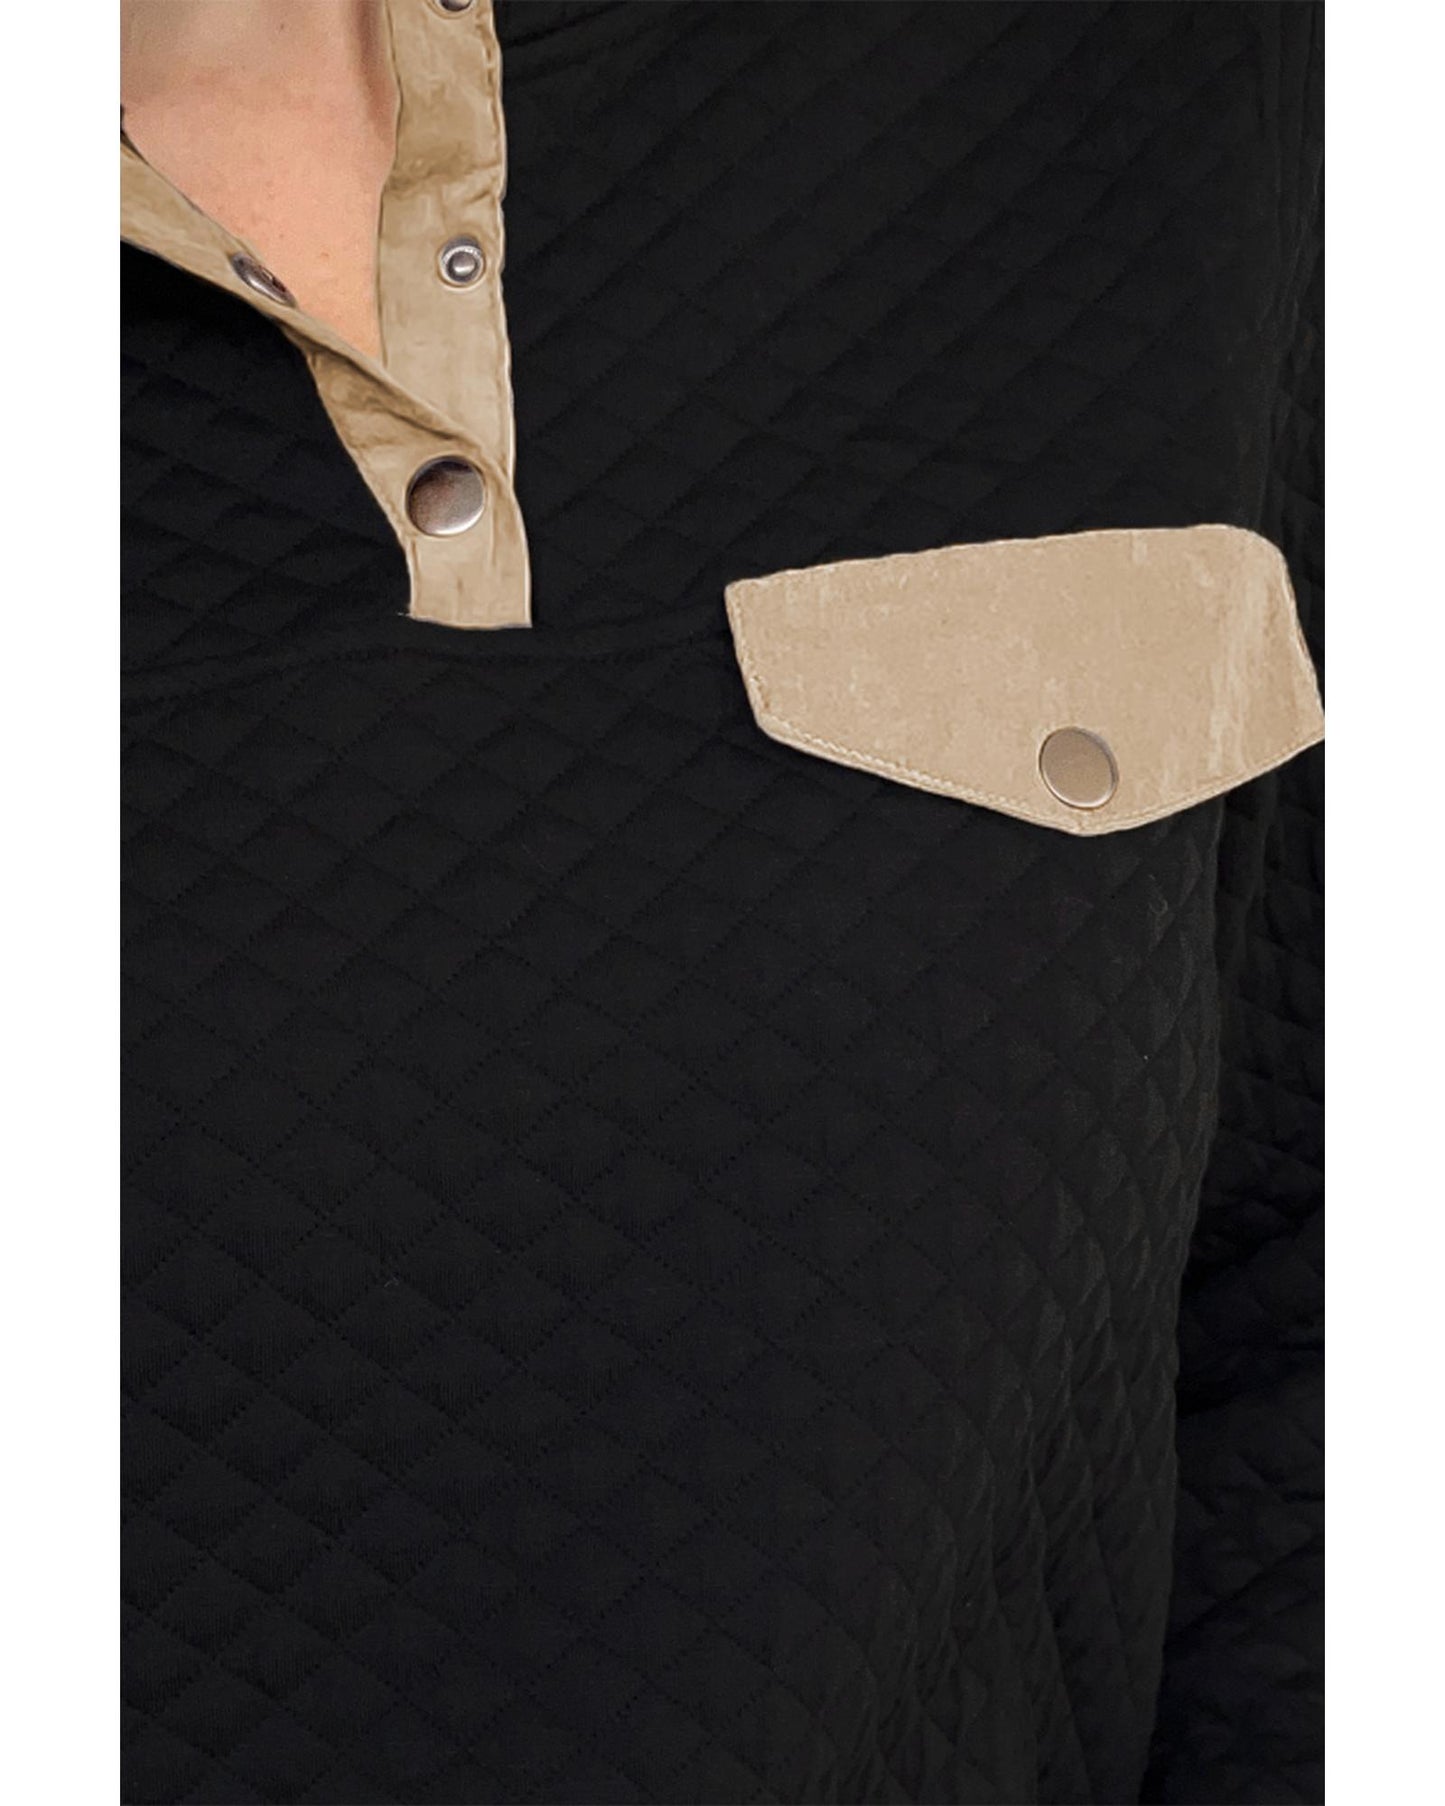 Azura Exchange Quilted Stand Neck Sweatshirt with Fake Front Pocket - 2XL